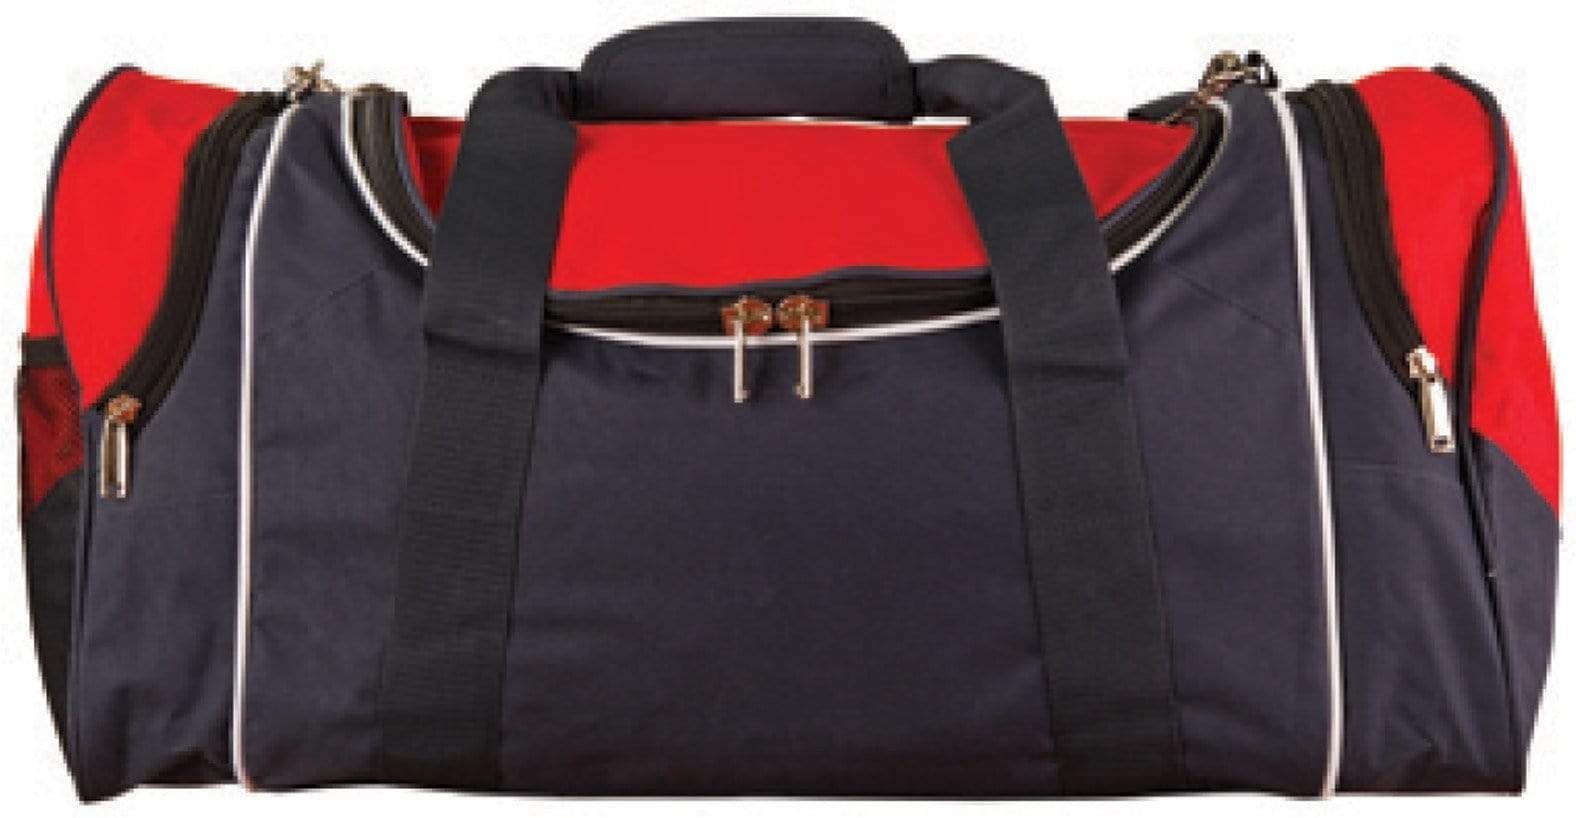 Winner Sports/ Travel Bag B2020 Active Wear Winning Spirit Navy/White/Red "(w)65cm x (h)32cm x (d)27cm, 56.2 Litres Capacity" 